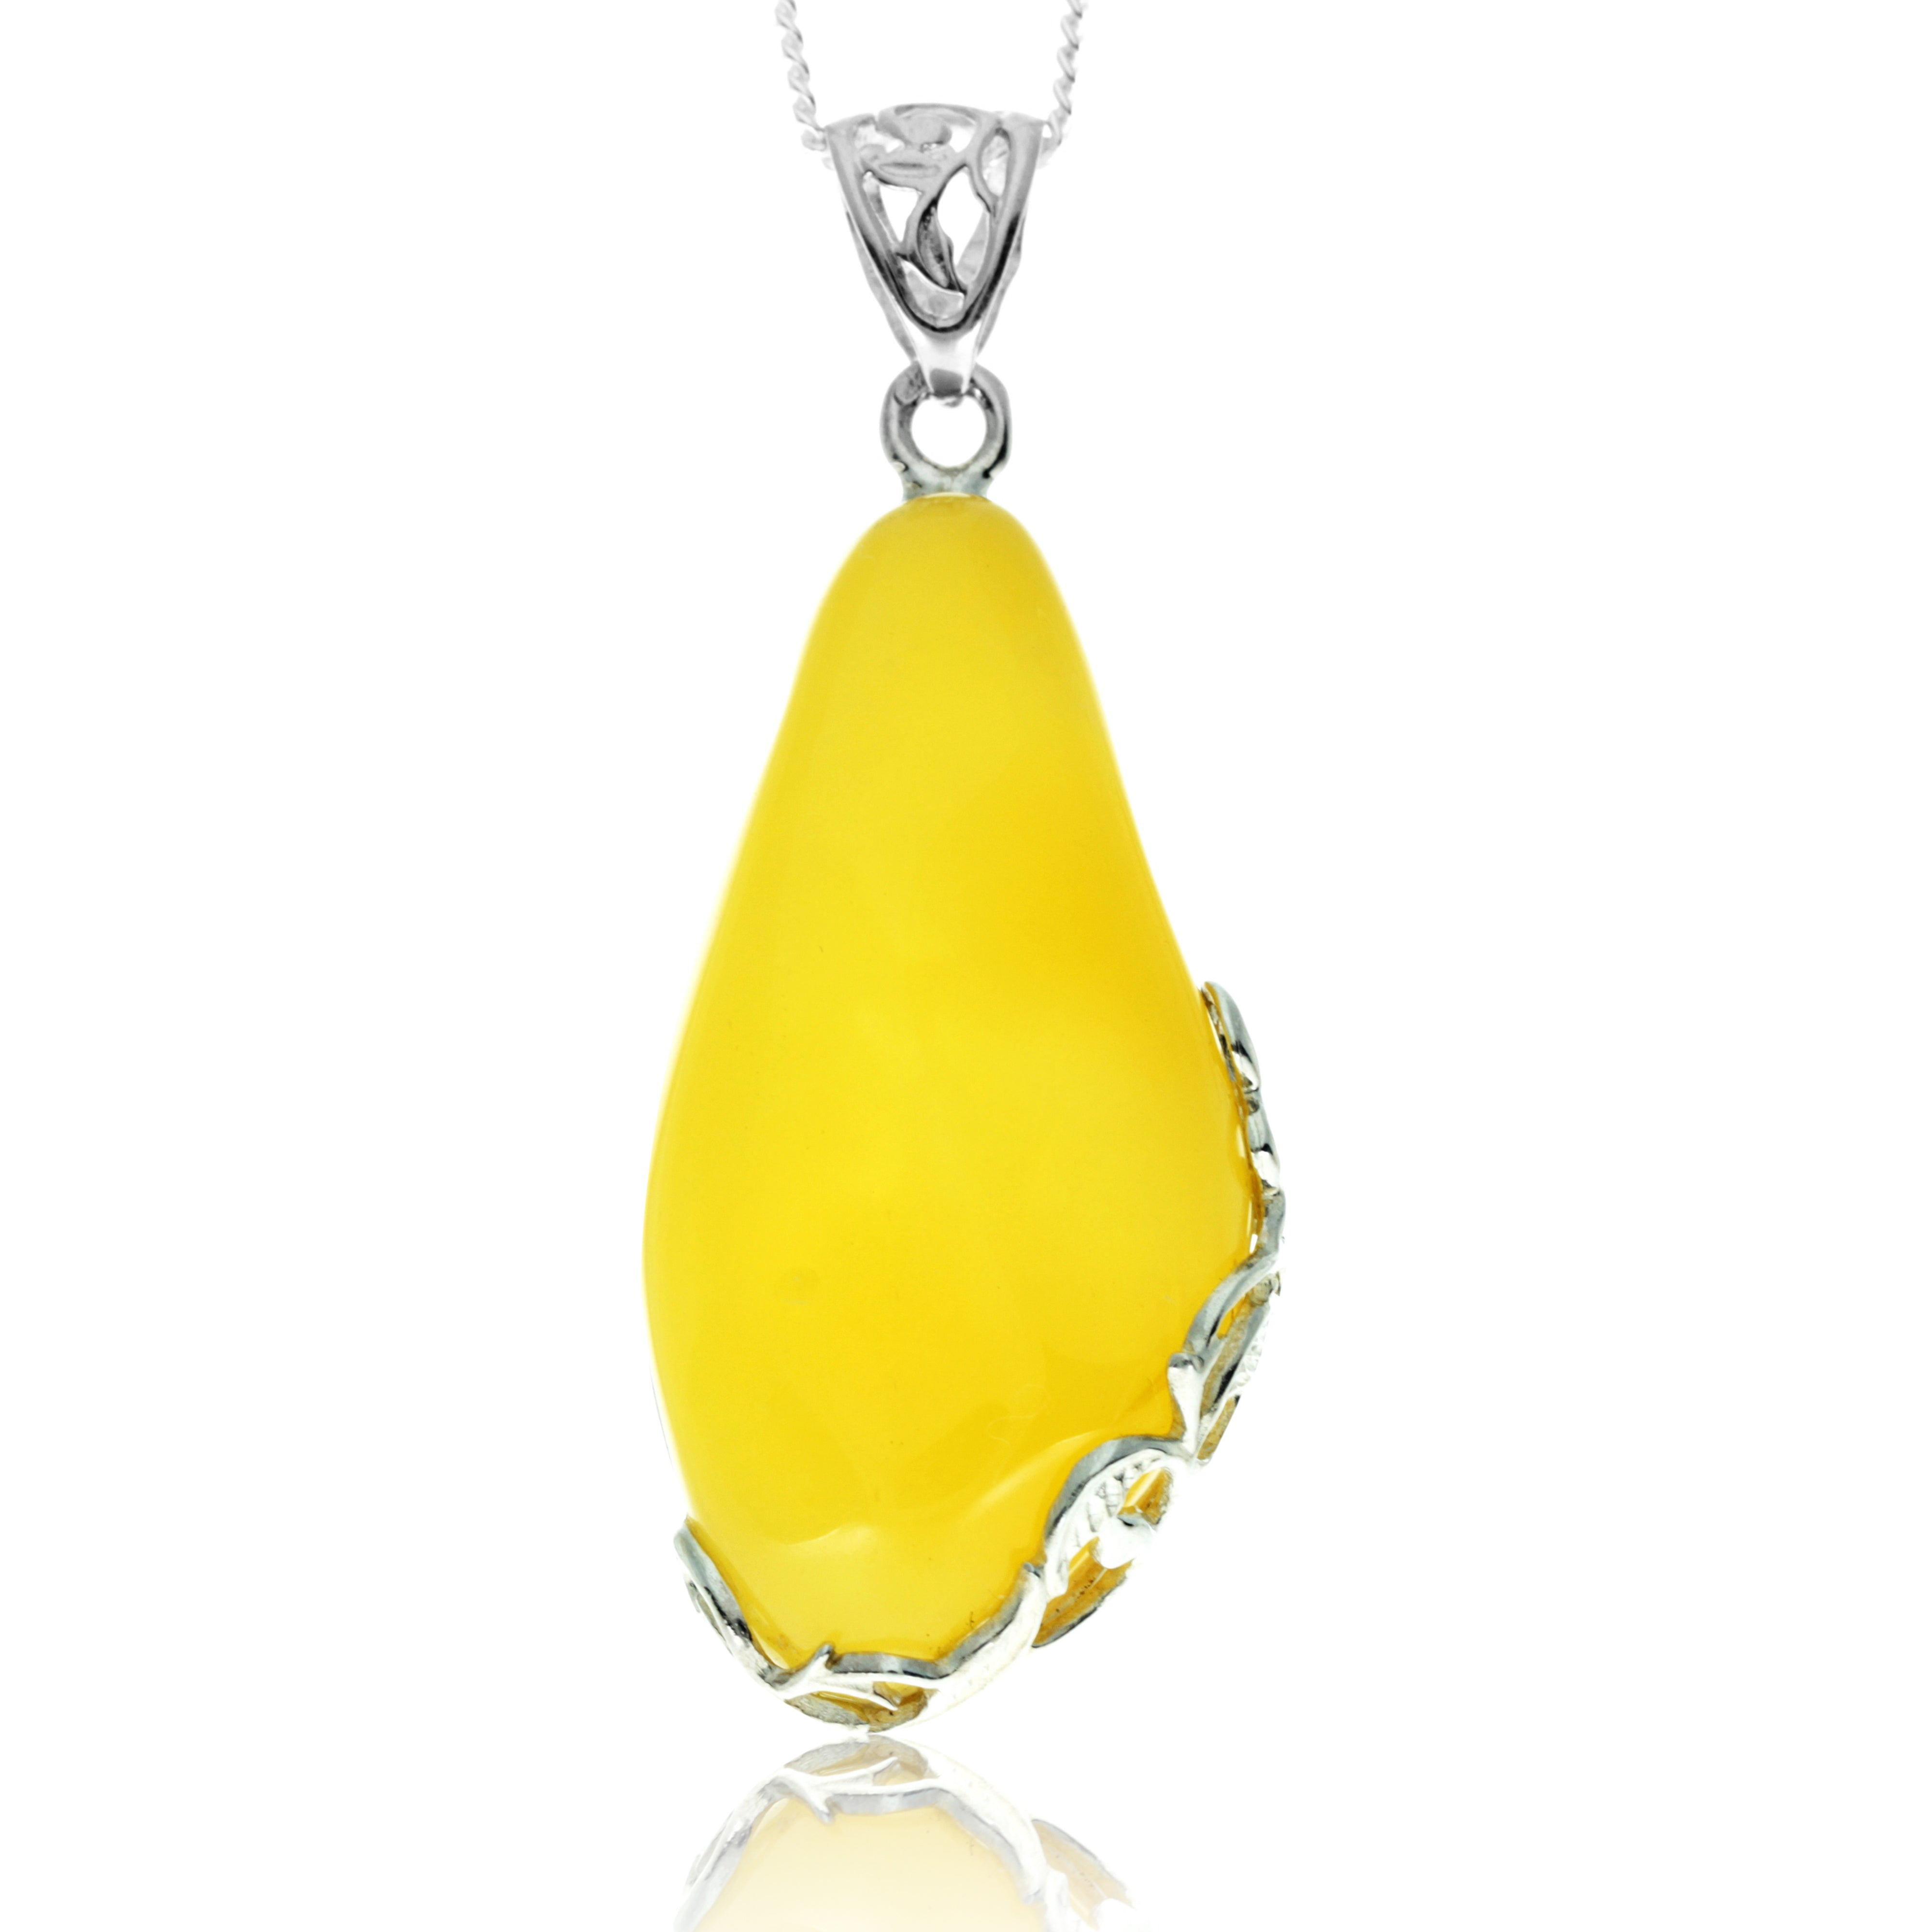 925 Sterling Silver & Genuine Lemon Baltic Amber Exlusive Unique Pendant - PD2425